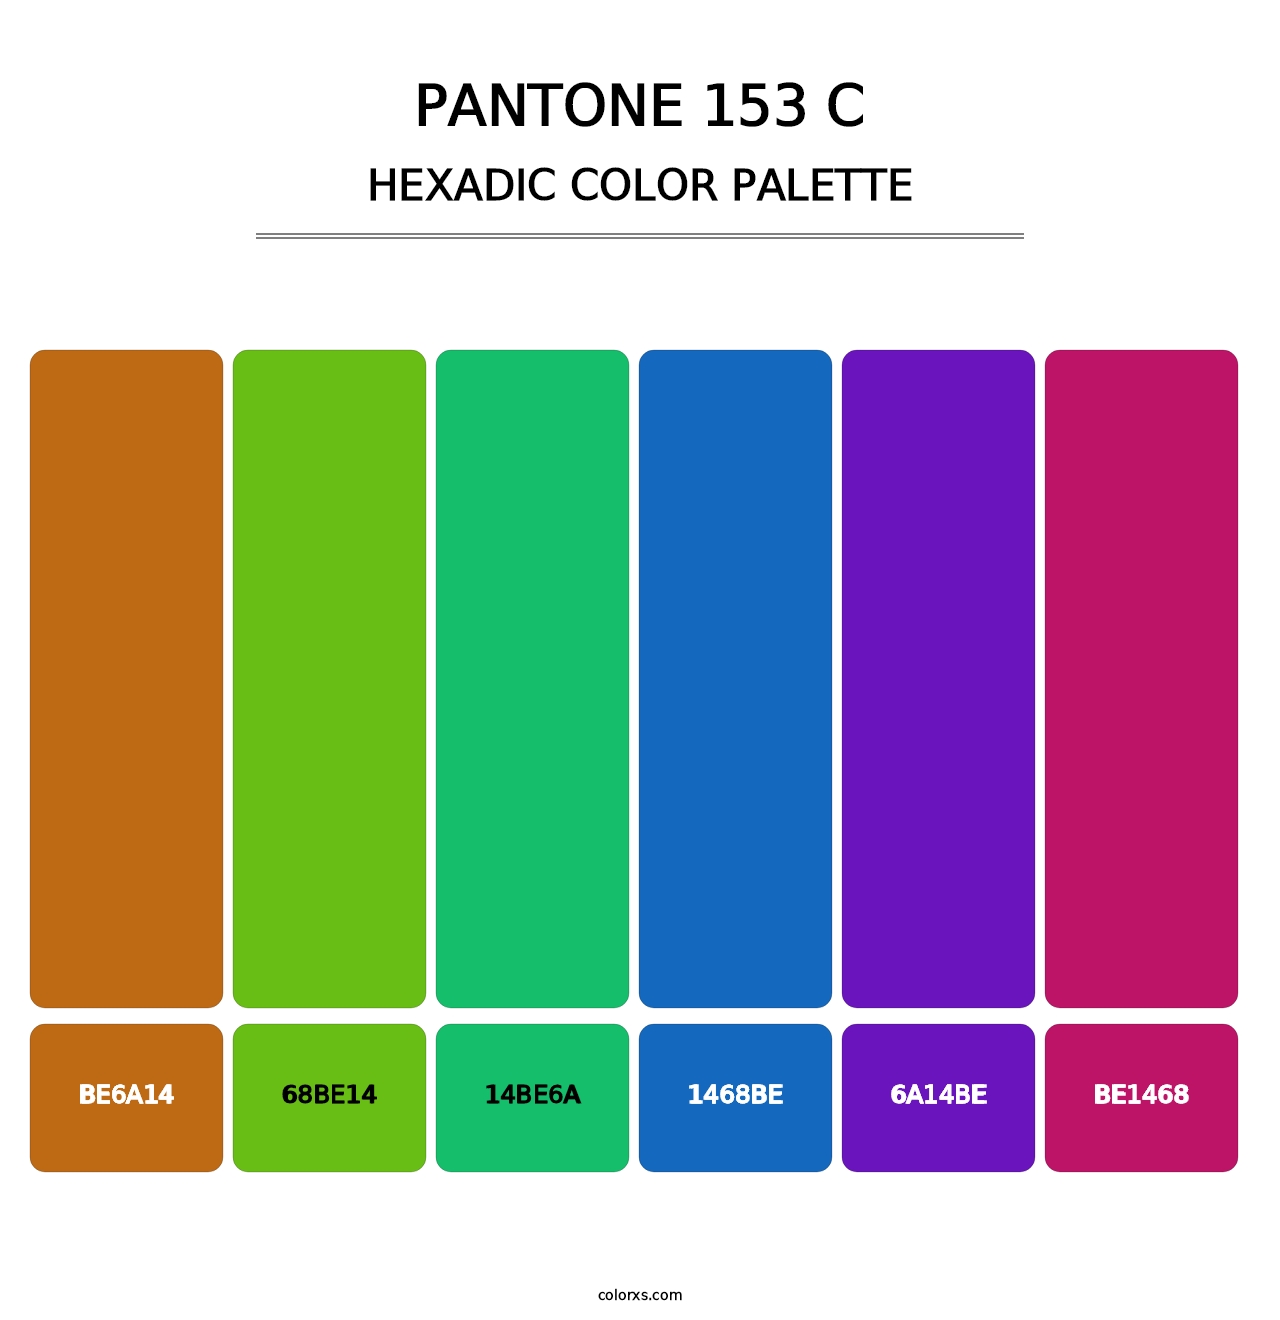 PANTONE 153 C - Hexadic Color Palette